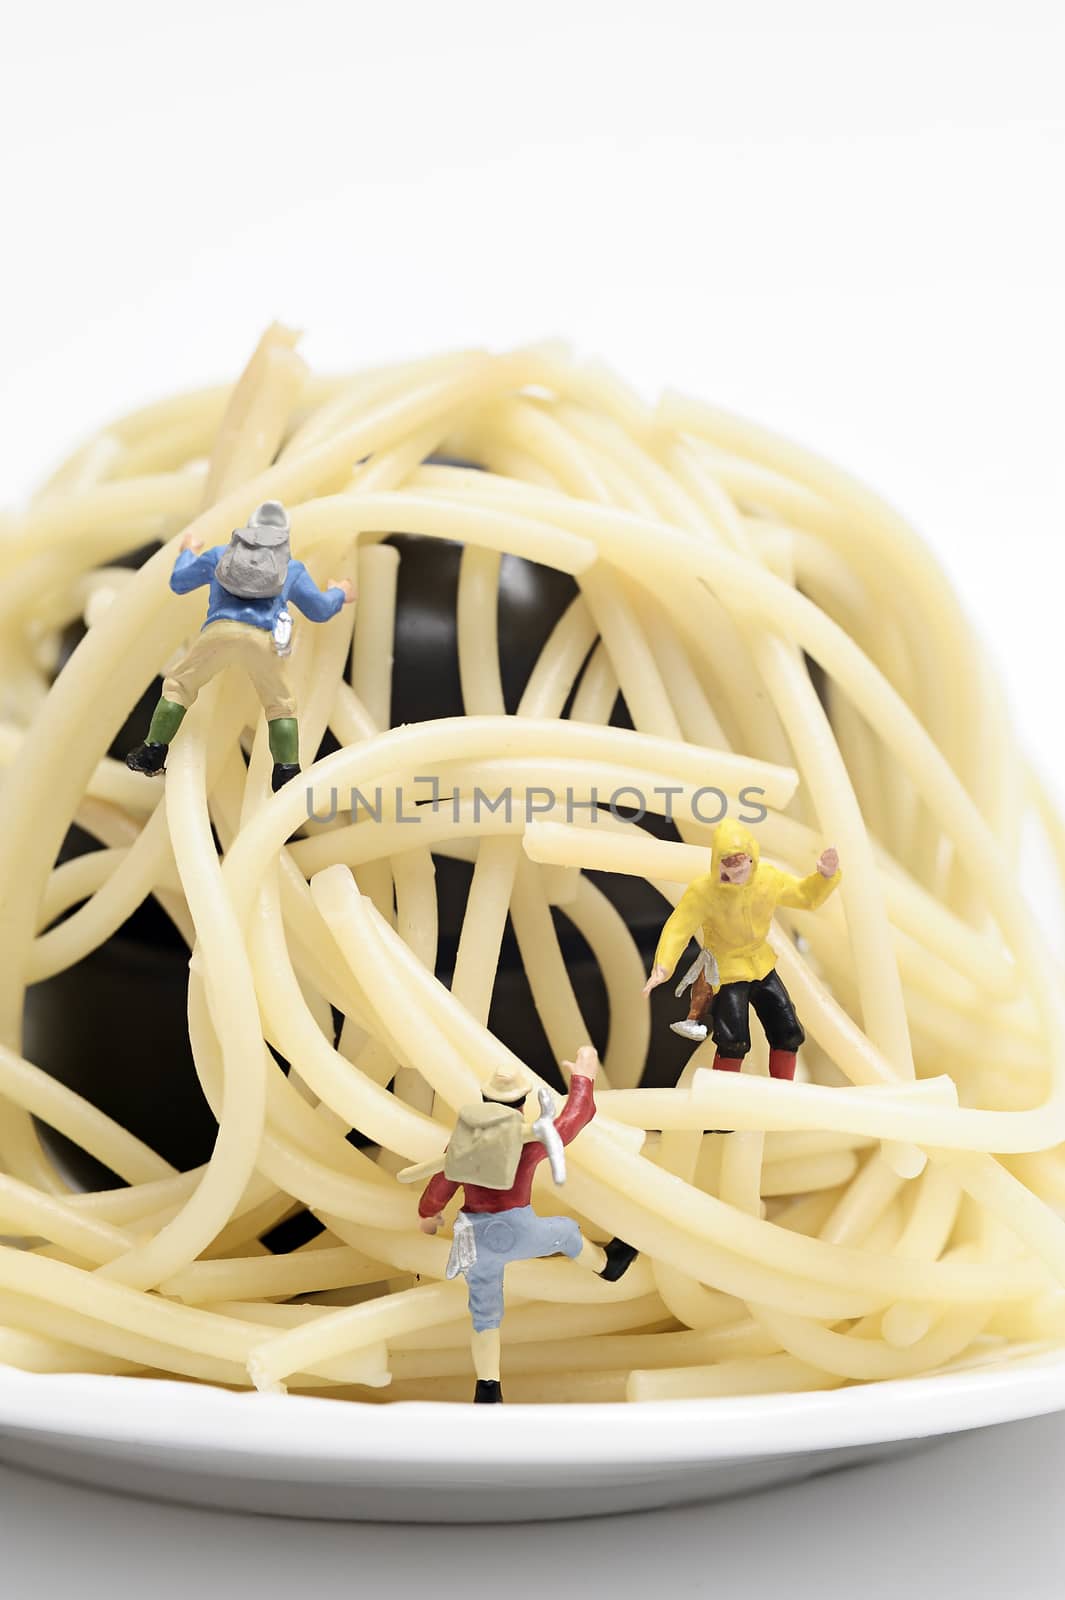 Miniature worker work with spaghetti